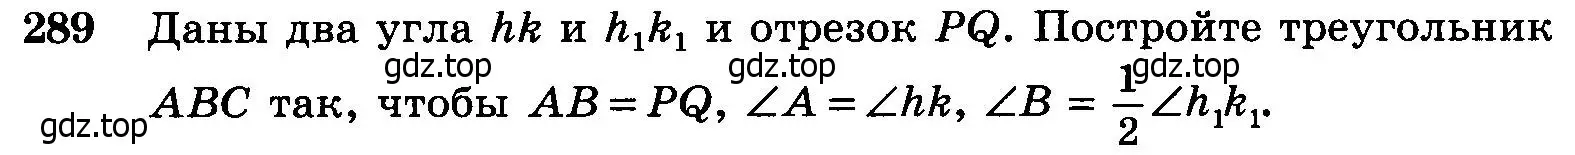 Условие номер 289 (страница 87) гдз по геометрии 7-9 класс Атанасян, Бутузов, учебник